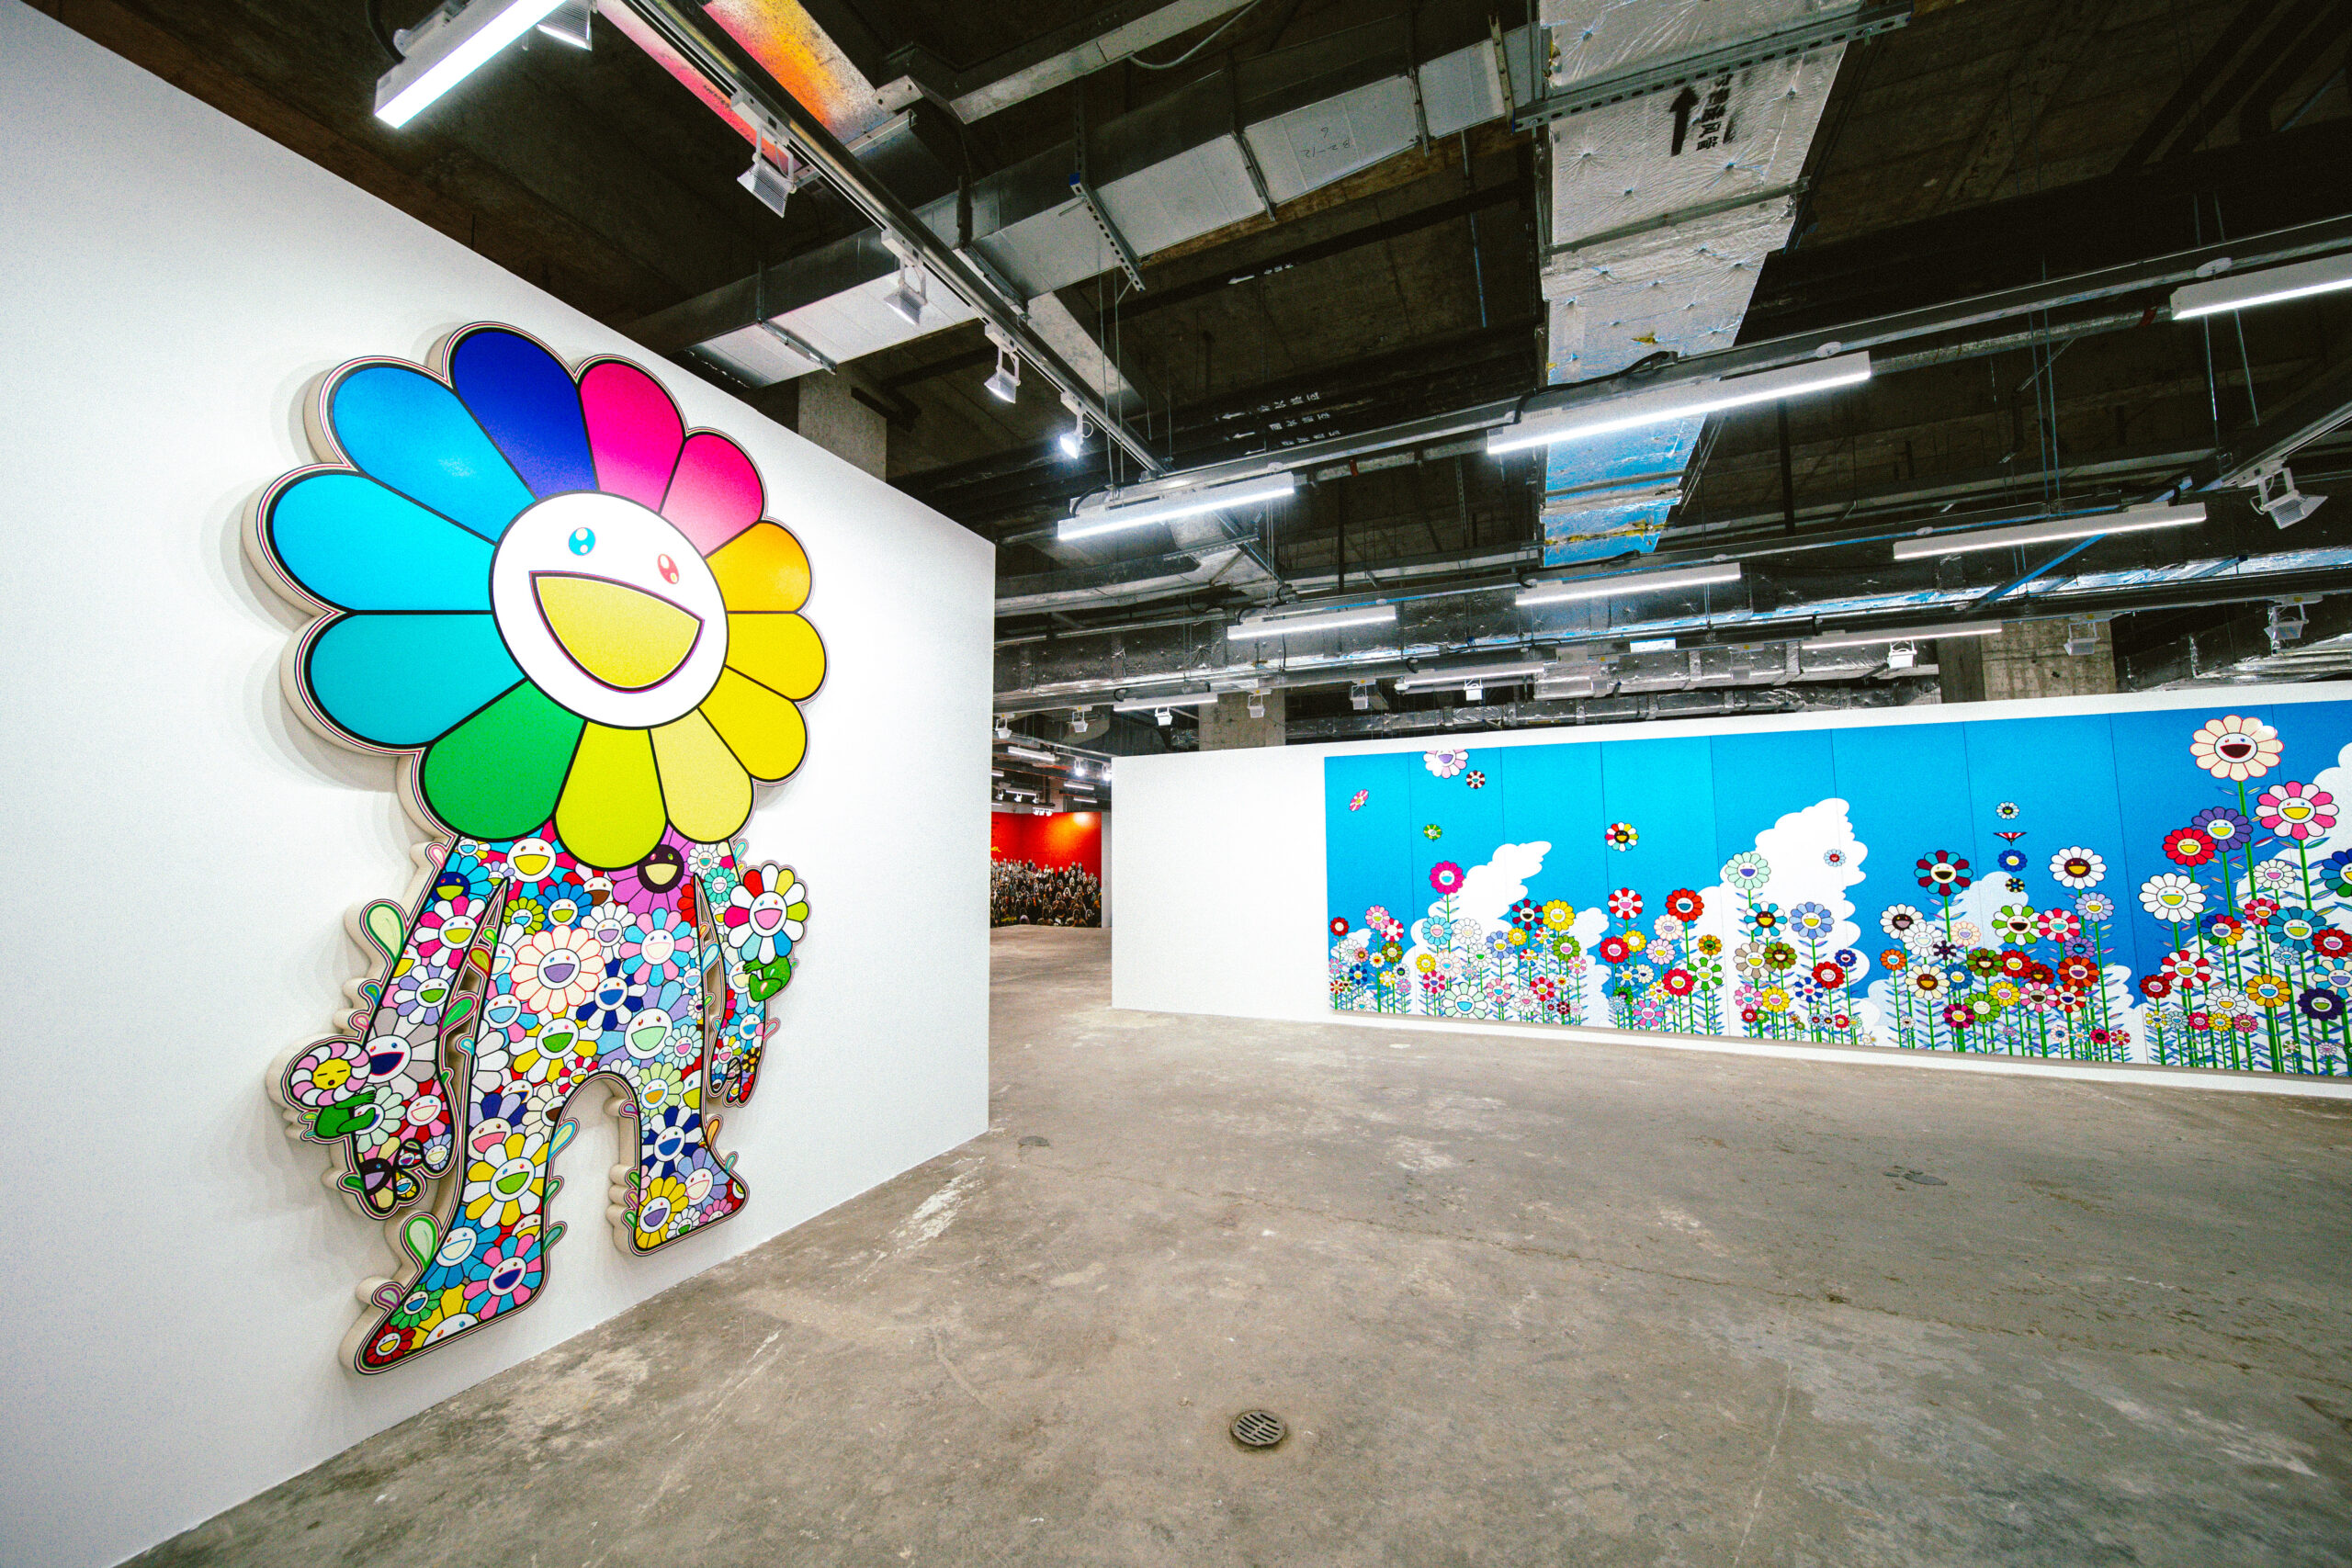 Tokyo artist Takashi Murakami's works are on display at the 2023 